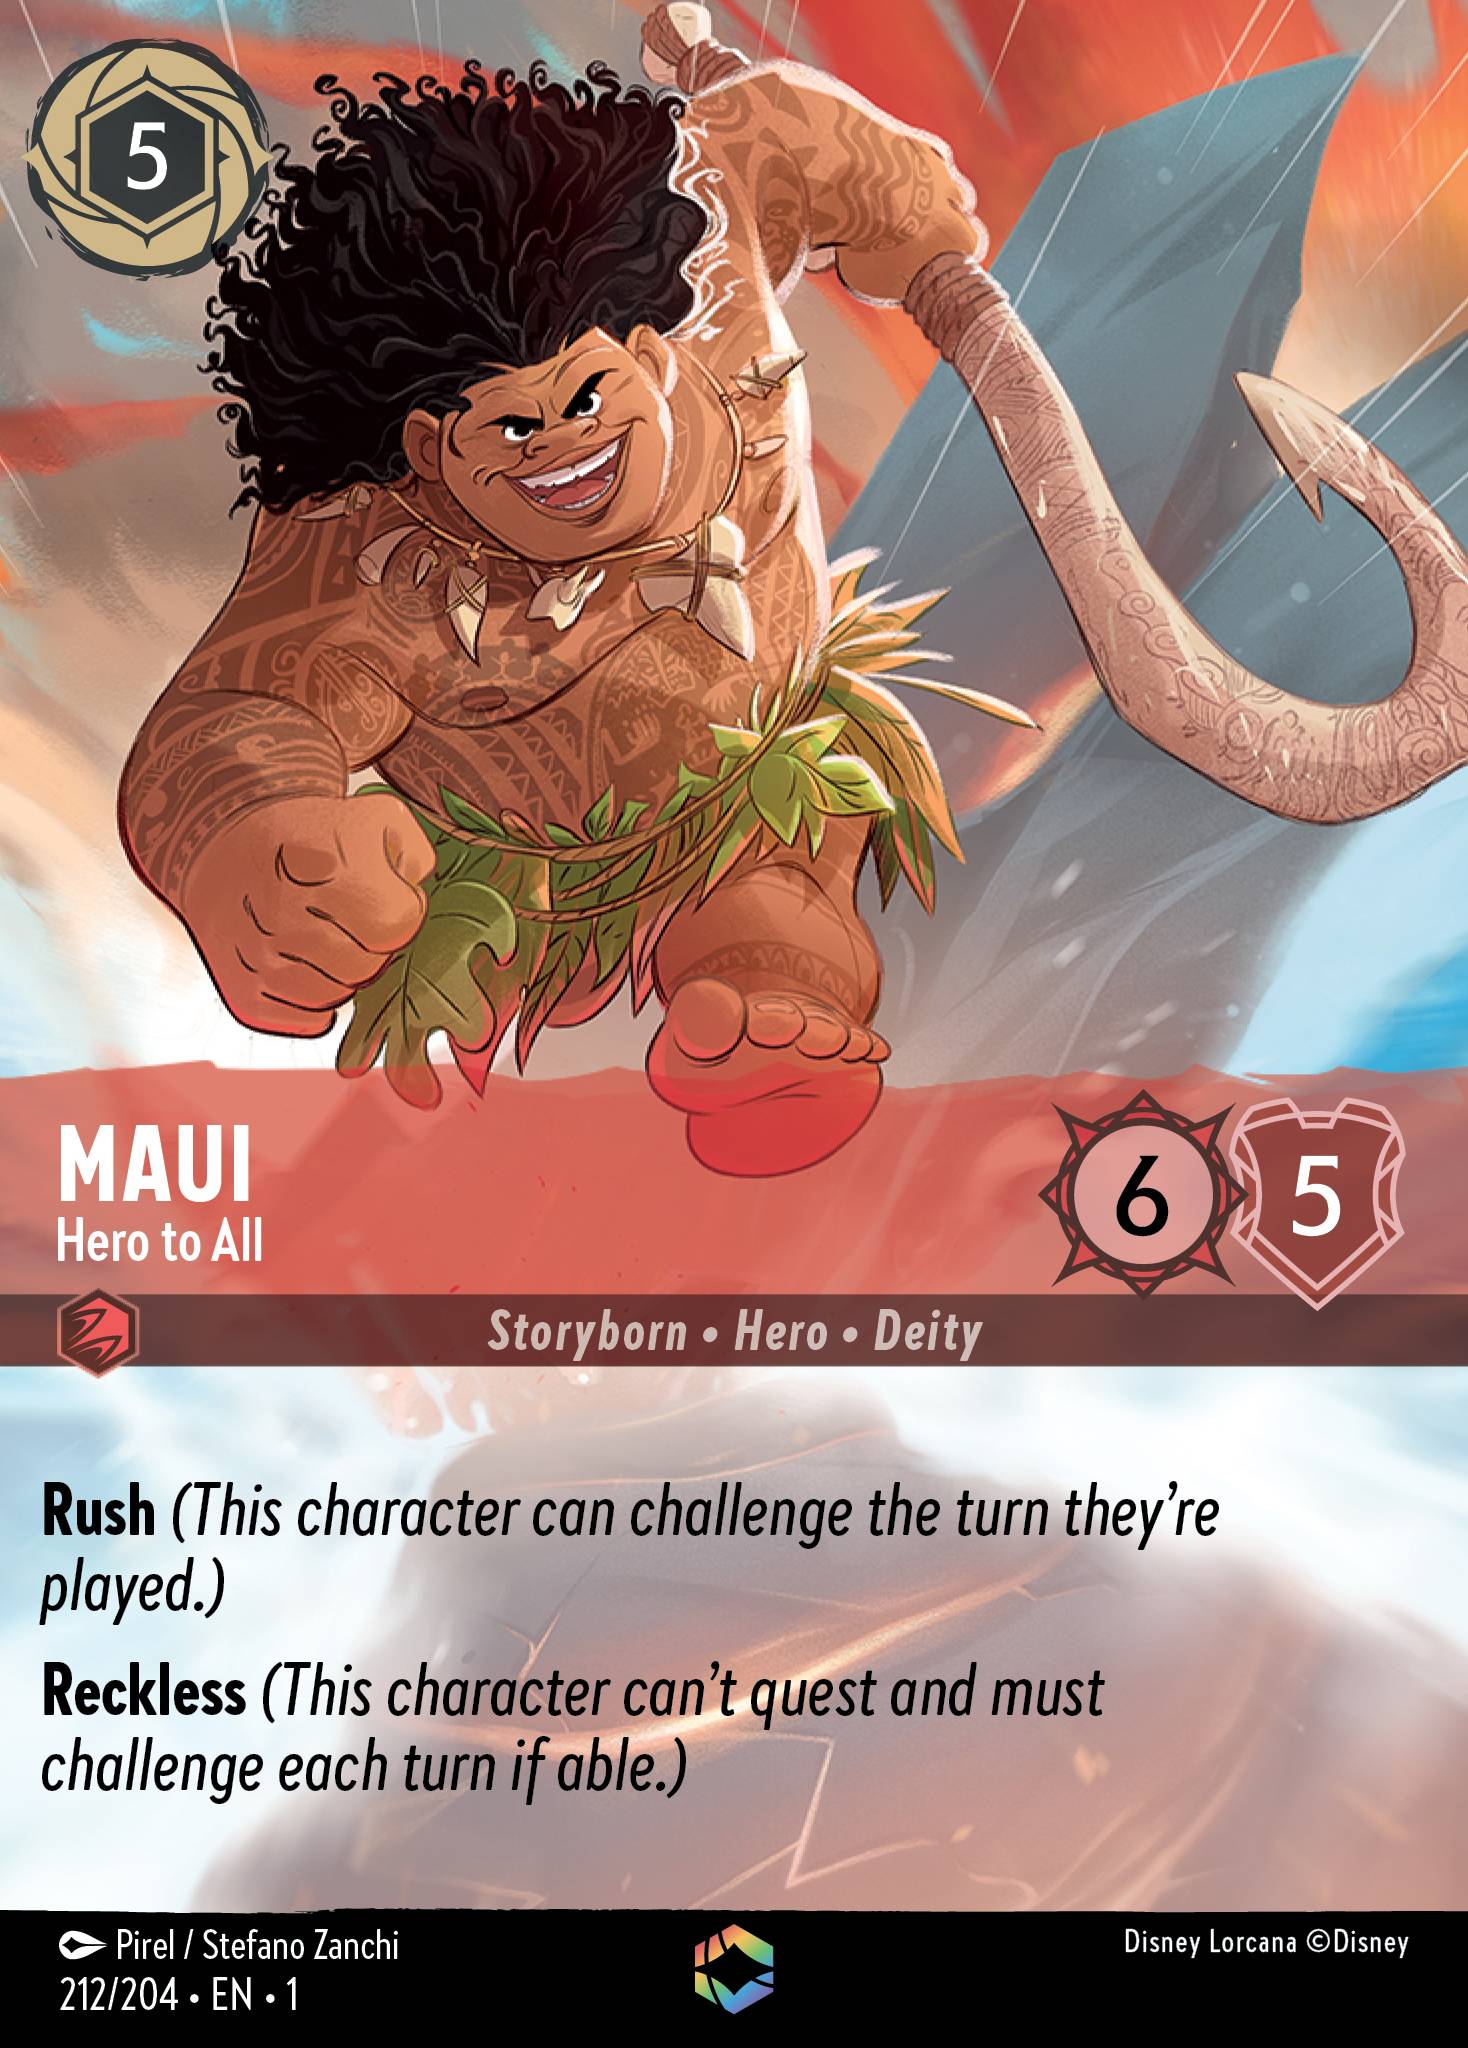 Maui - Hero to All